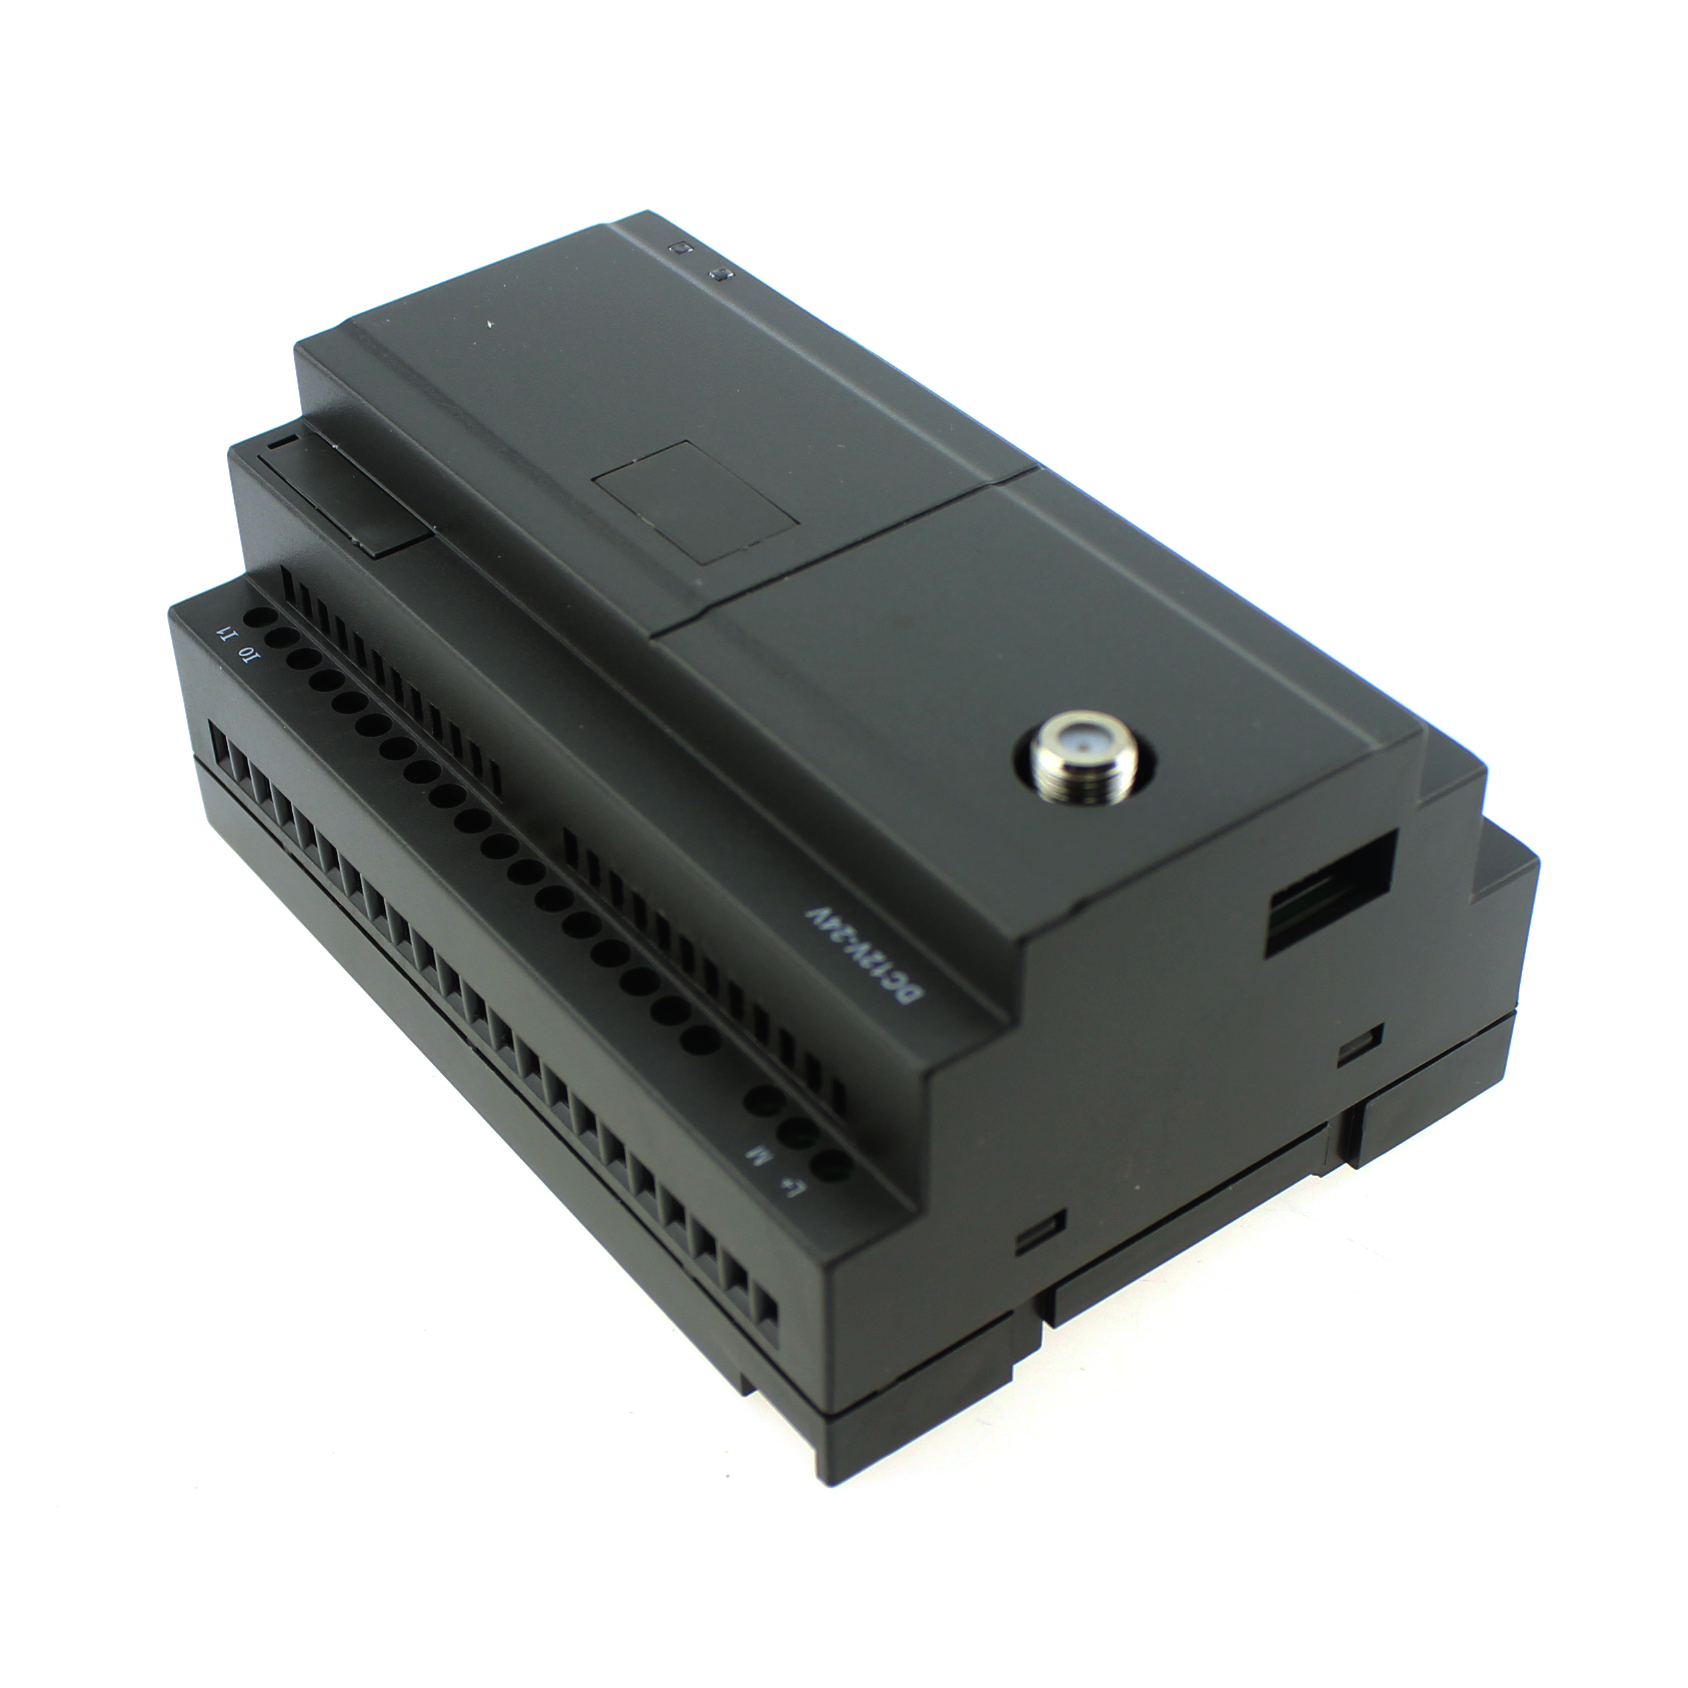 APB-SMS APB Series Programmable Logic Controller PLC controller PLC